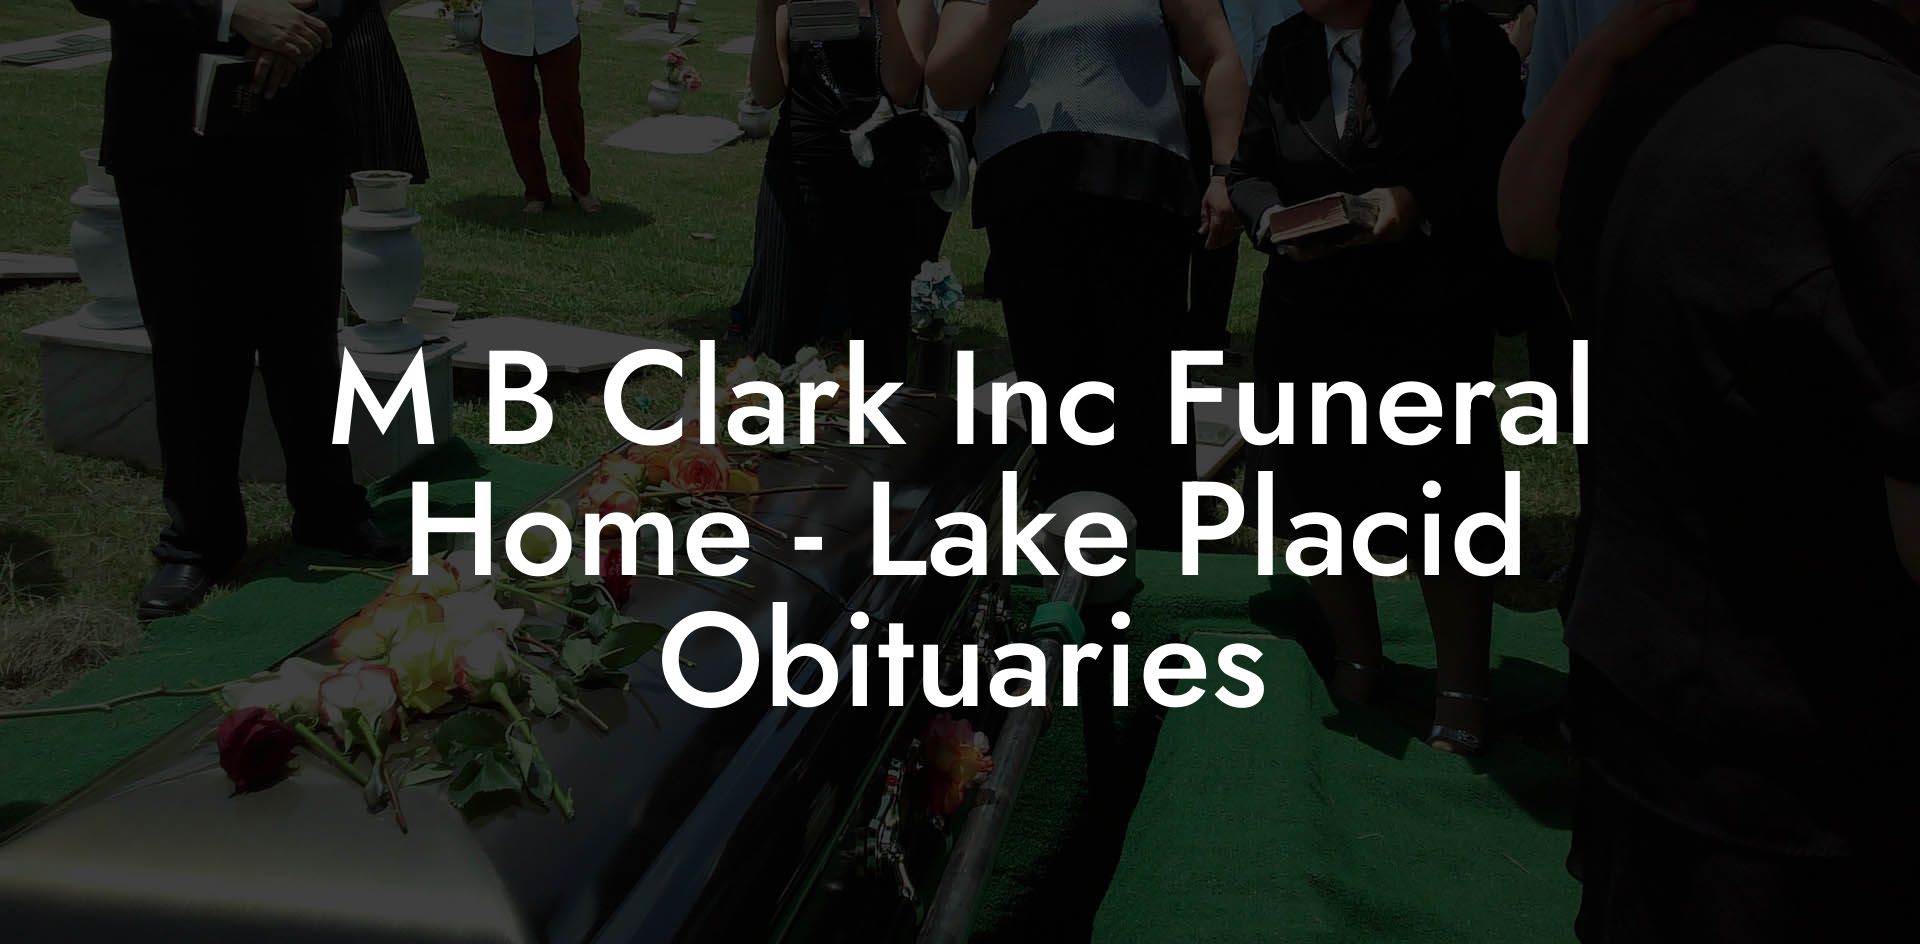 M B Clark Inc Funeral Home - Lake Placid Obituaries